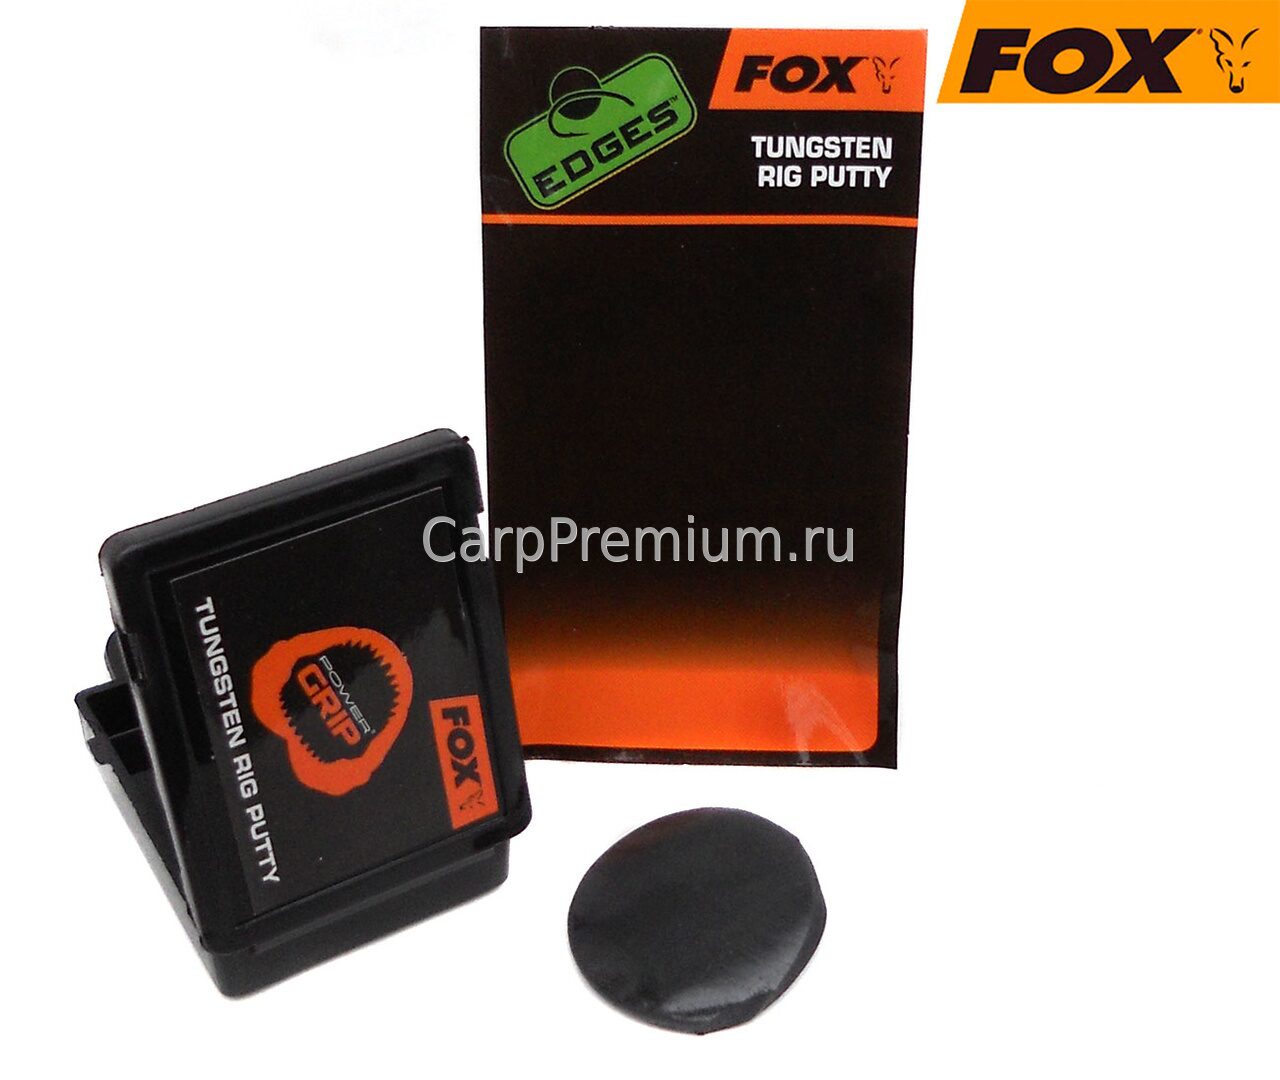 Мягкий вольфрам для огрузки поводков Fox (Фокс) - EDGES Power Grip Tungsten Rig Putty